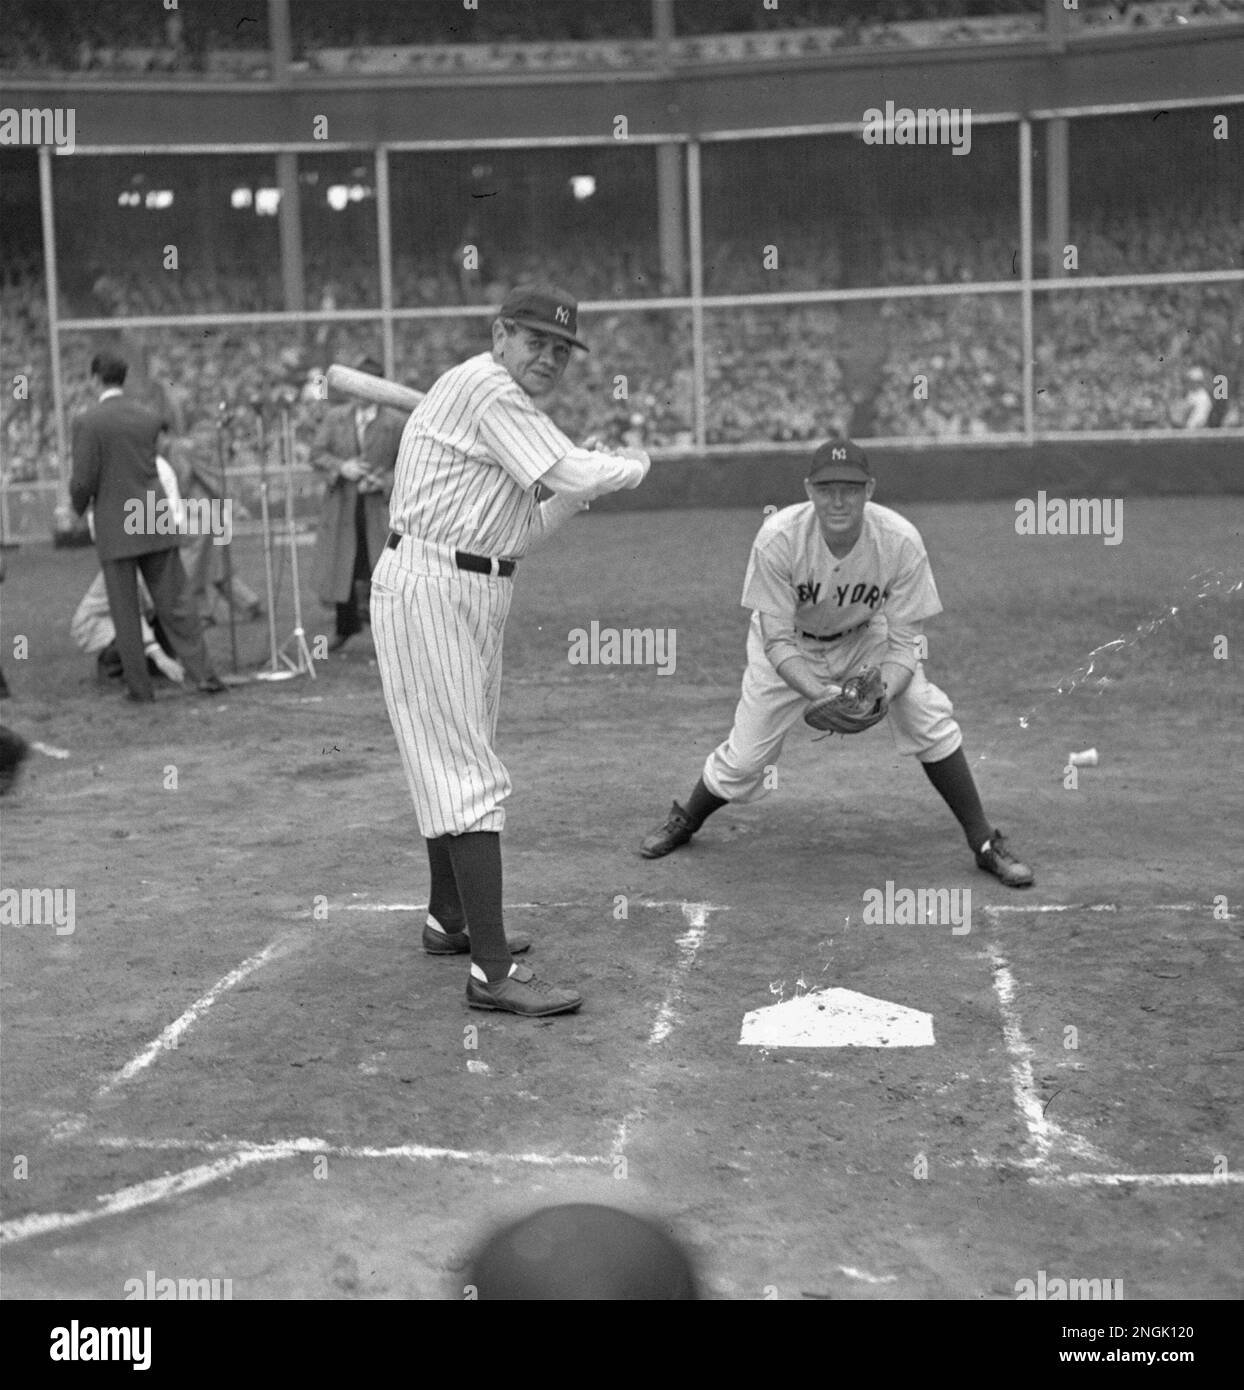 Babe Ruth, baseball's top home run hitter, displayed his batting